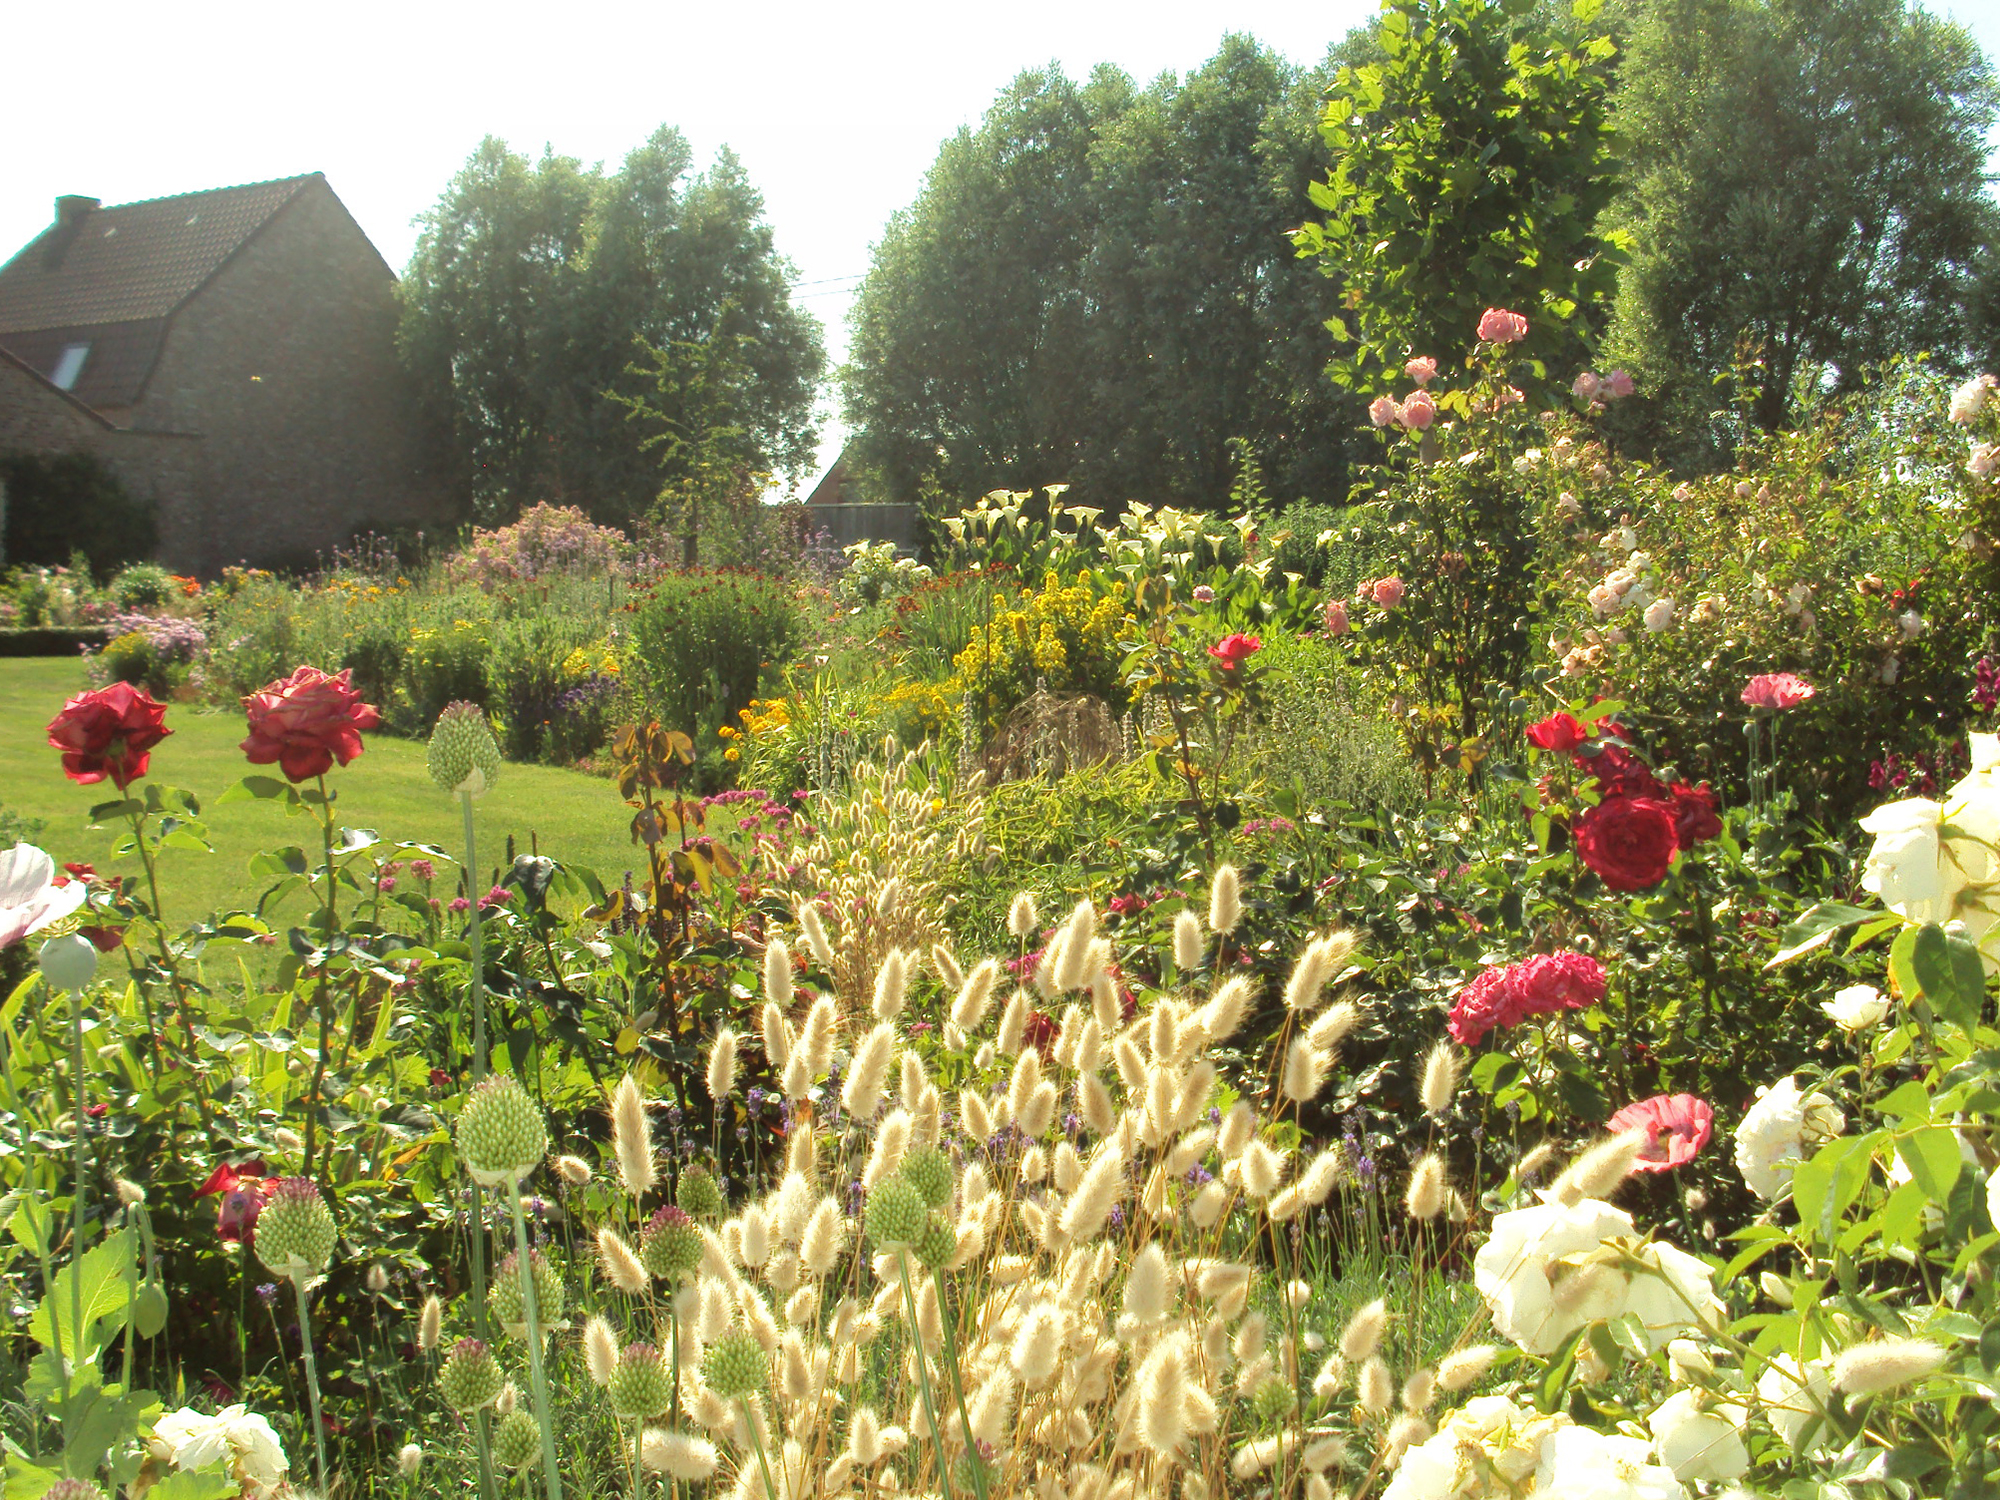 Foto: Tuinen van Luc en Frieda in Roesbrugge-Haringe, België